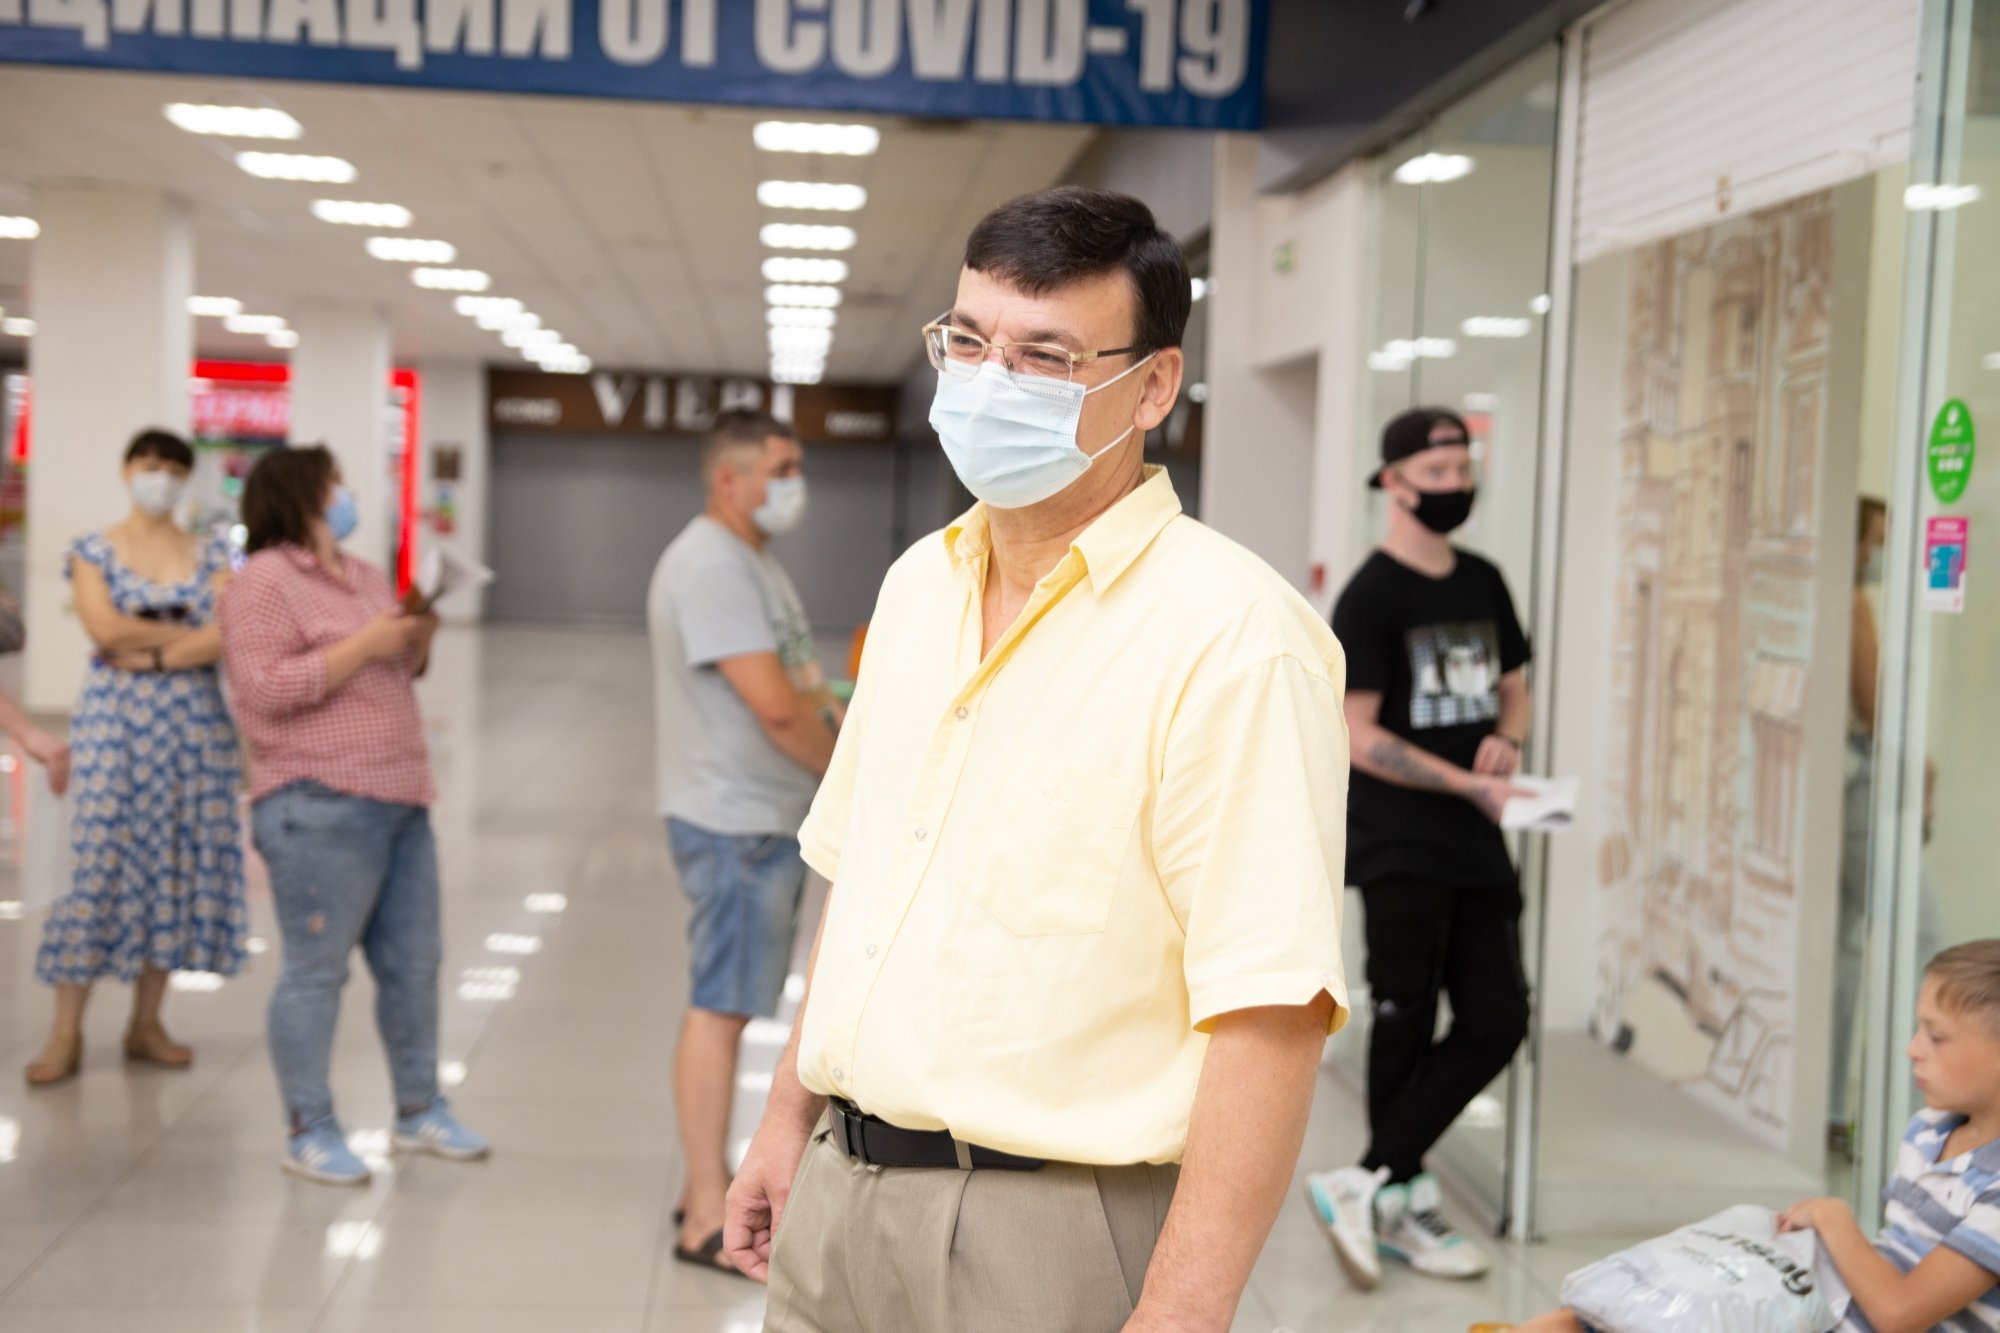 Фото: как идет вакцинация челнинцев в торговом центре «Омега» 